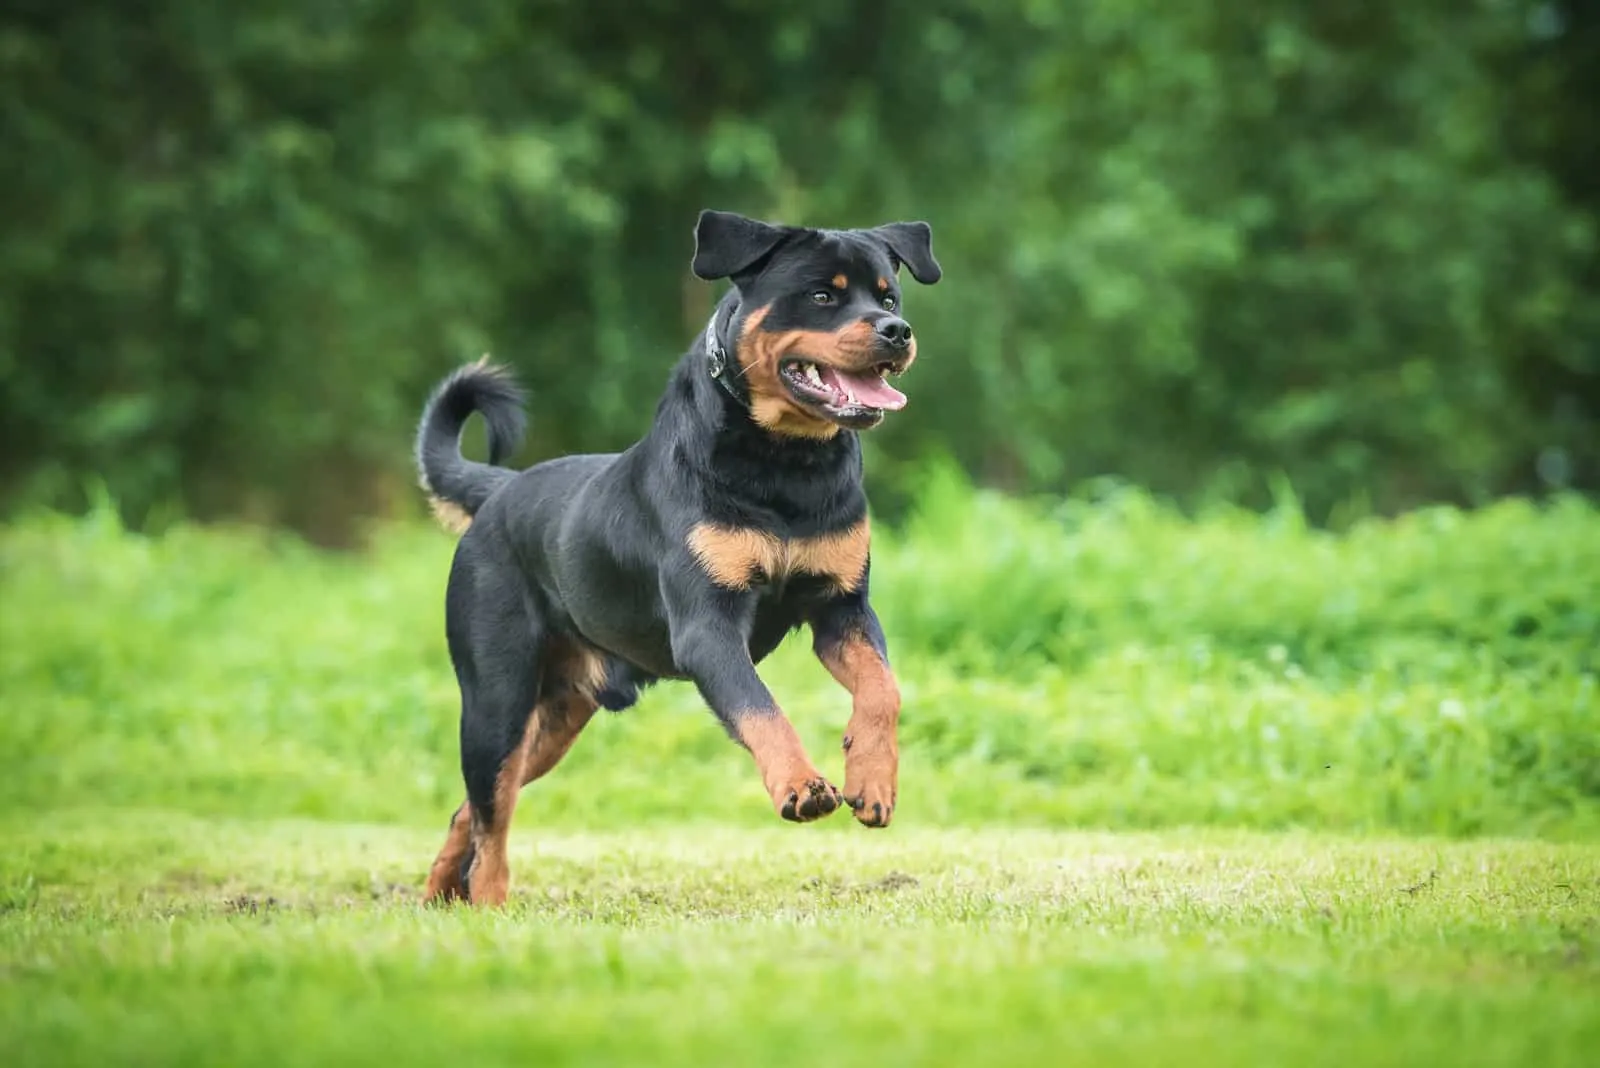 the happy Rottweiler runs across the grass